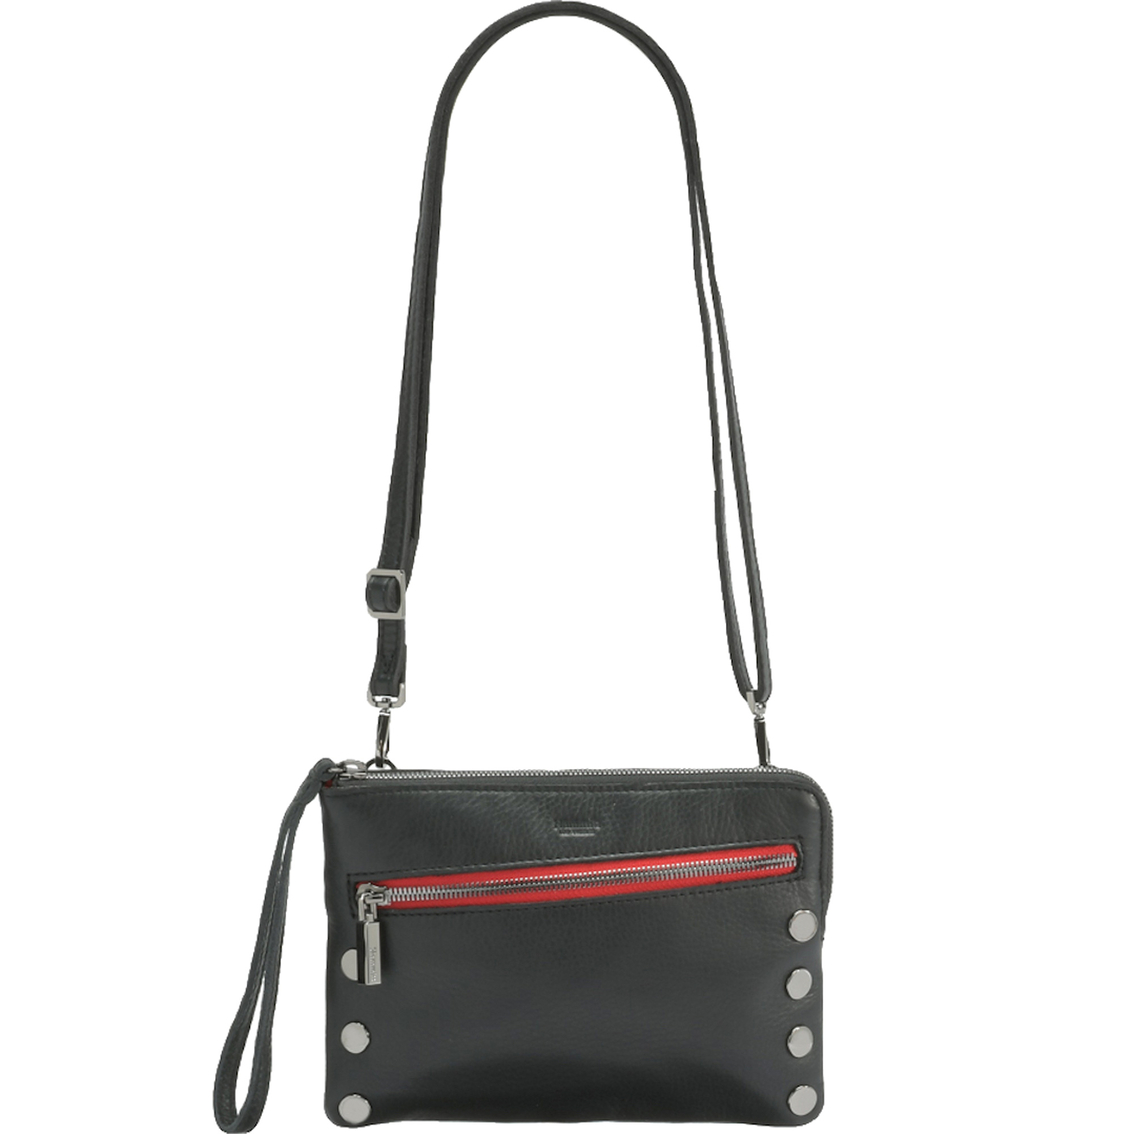 Hammitt Nash Small Zip Handbag - Image 2 of 4